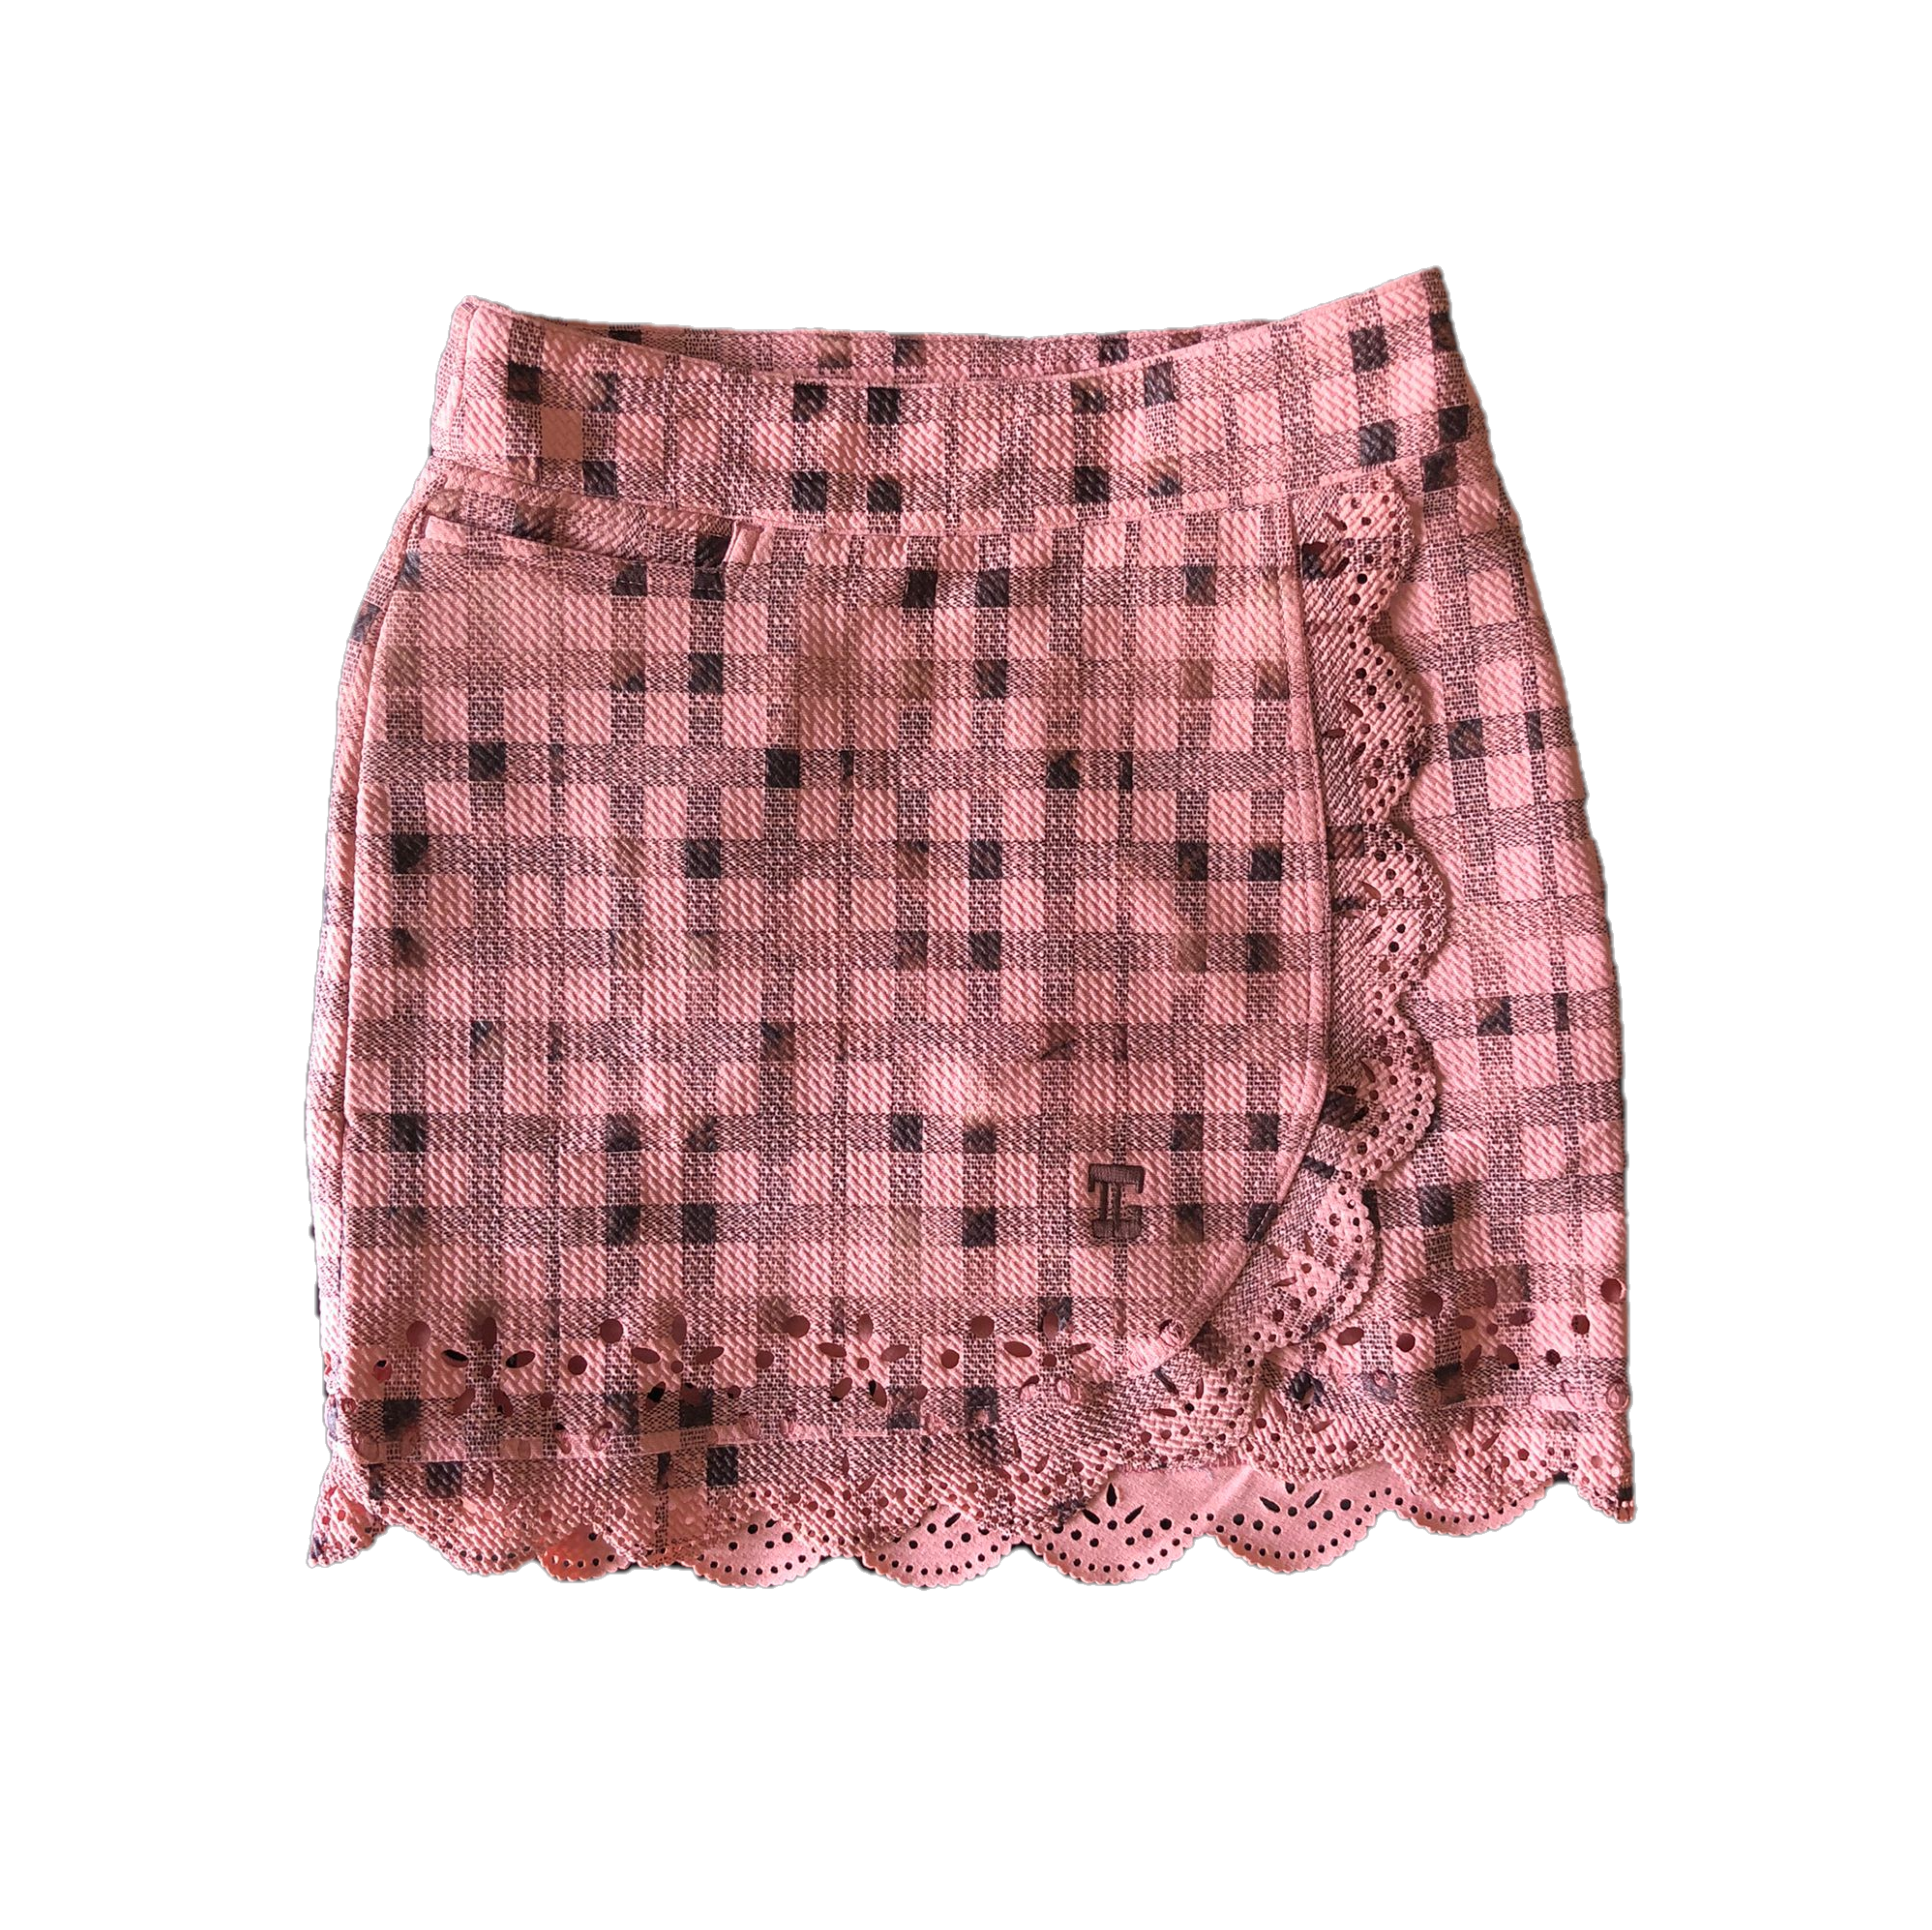 LS-041B || Ladies Skirt Wrap Around Light Brown With Dark Brown Check Lace Hem